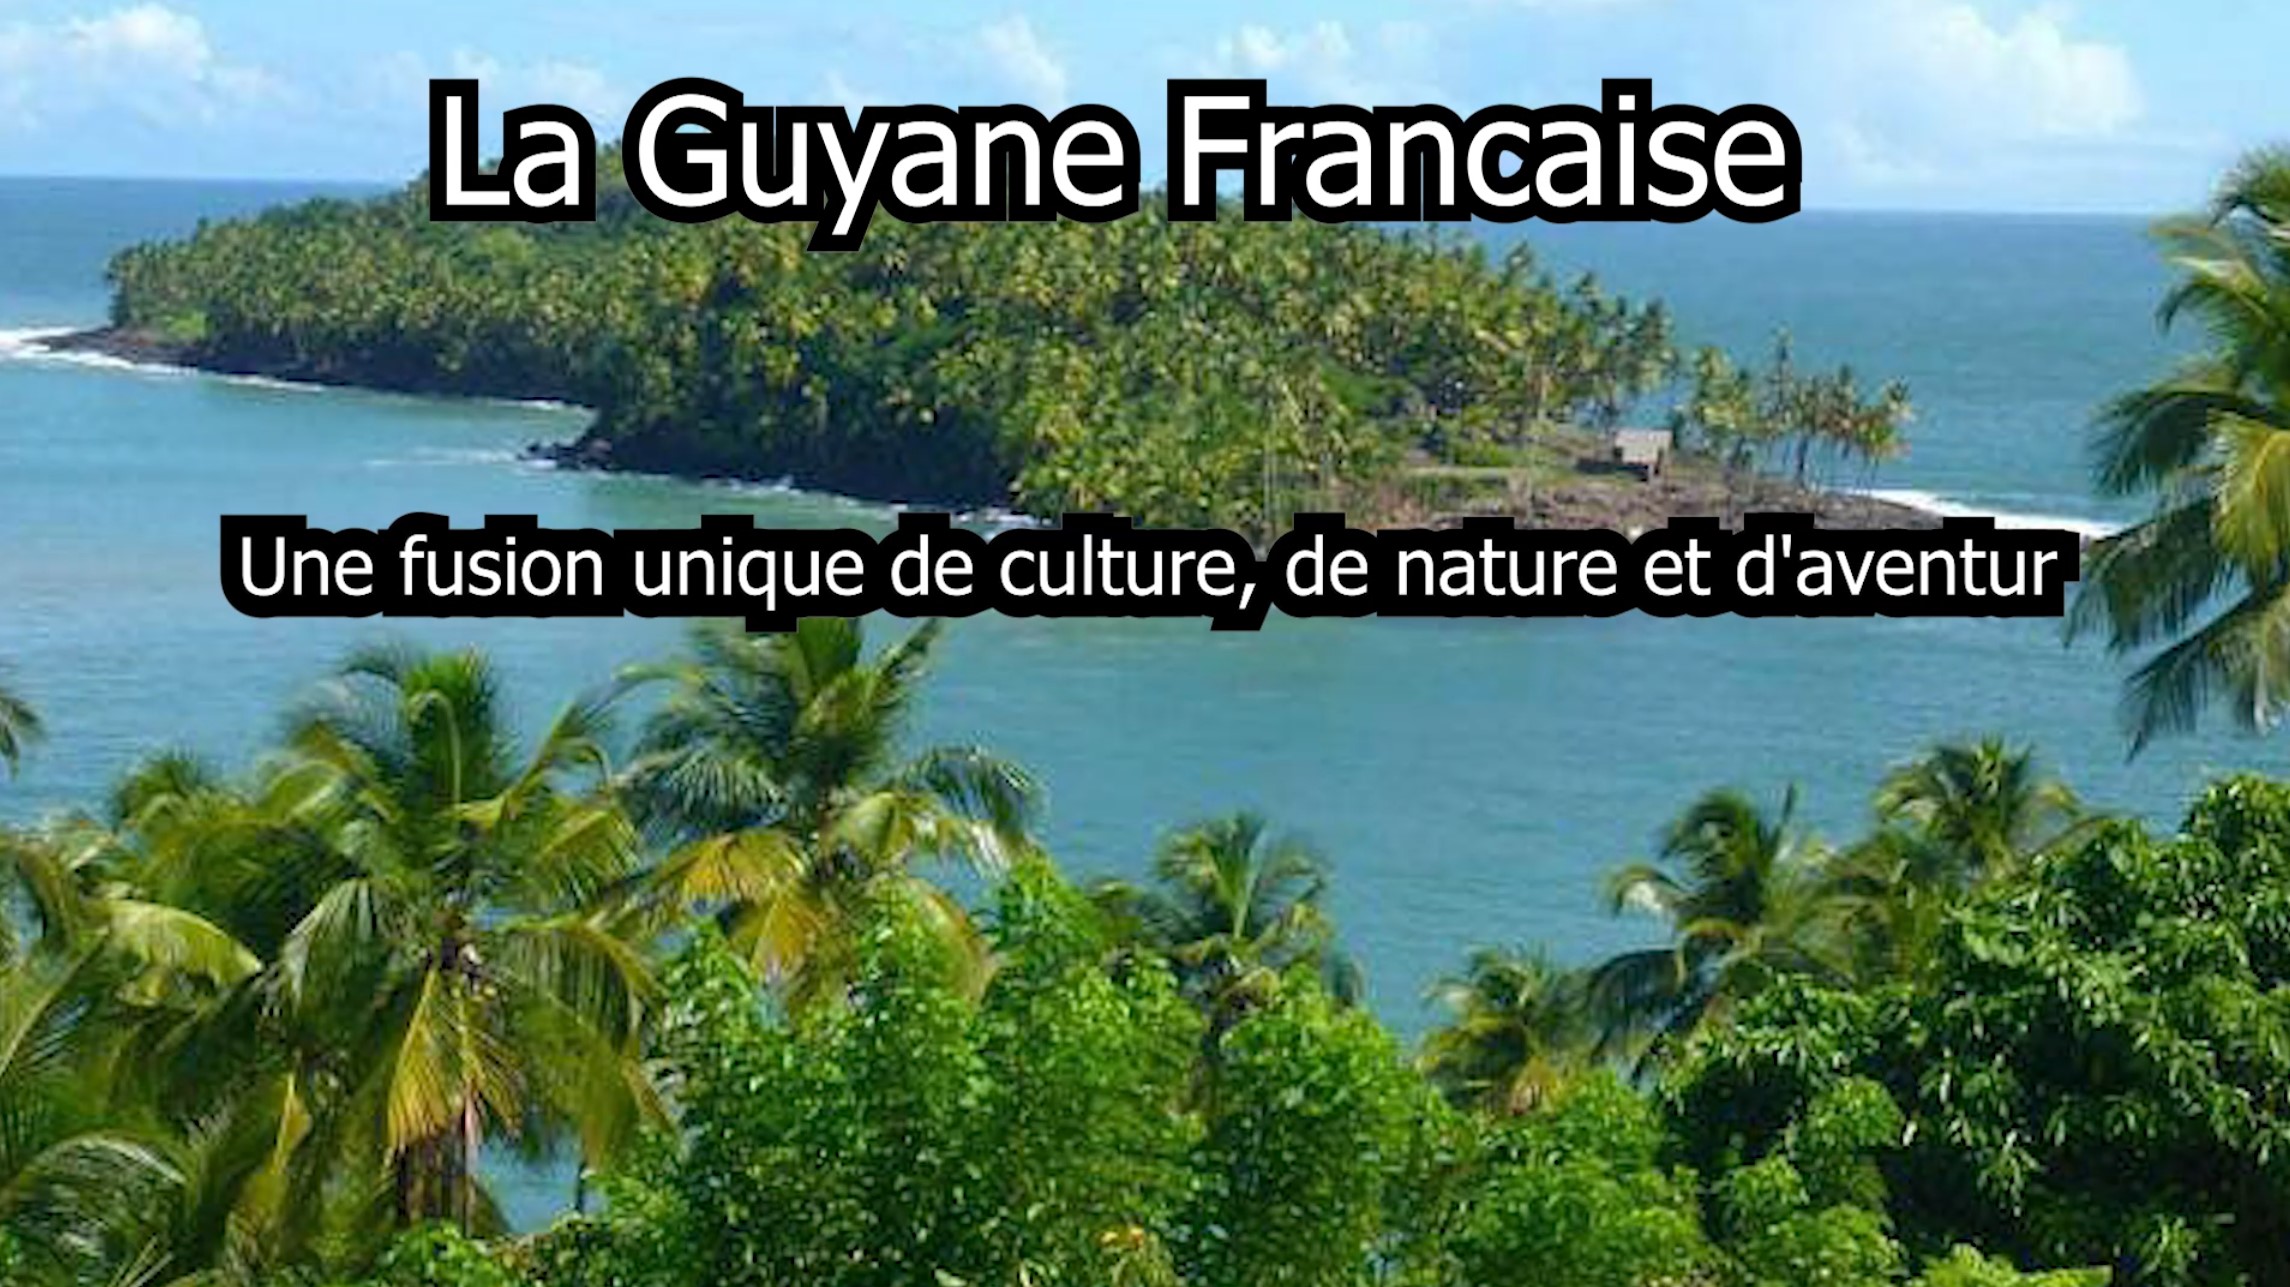 FRANCÉS - La Guyane francaise - GALLEGO MARTÍNEZ, JOSÉ - MOTOS GARCÍA, DAVID 2º BACH - Profesora CARMEN MARIA FORTÚN LEÓN